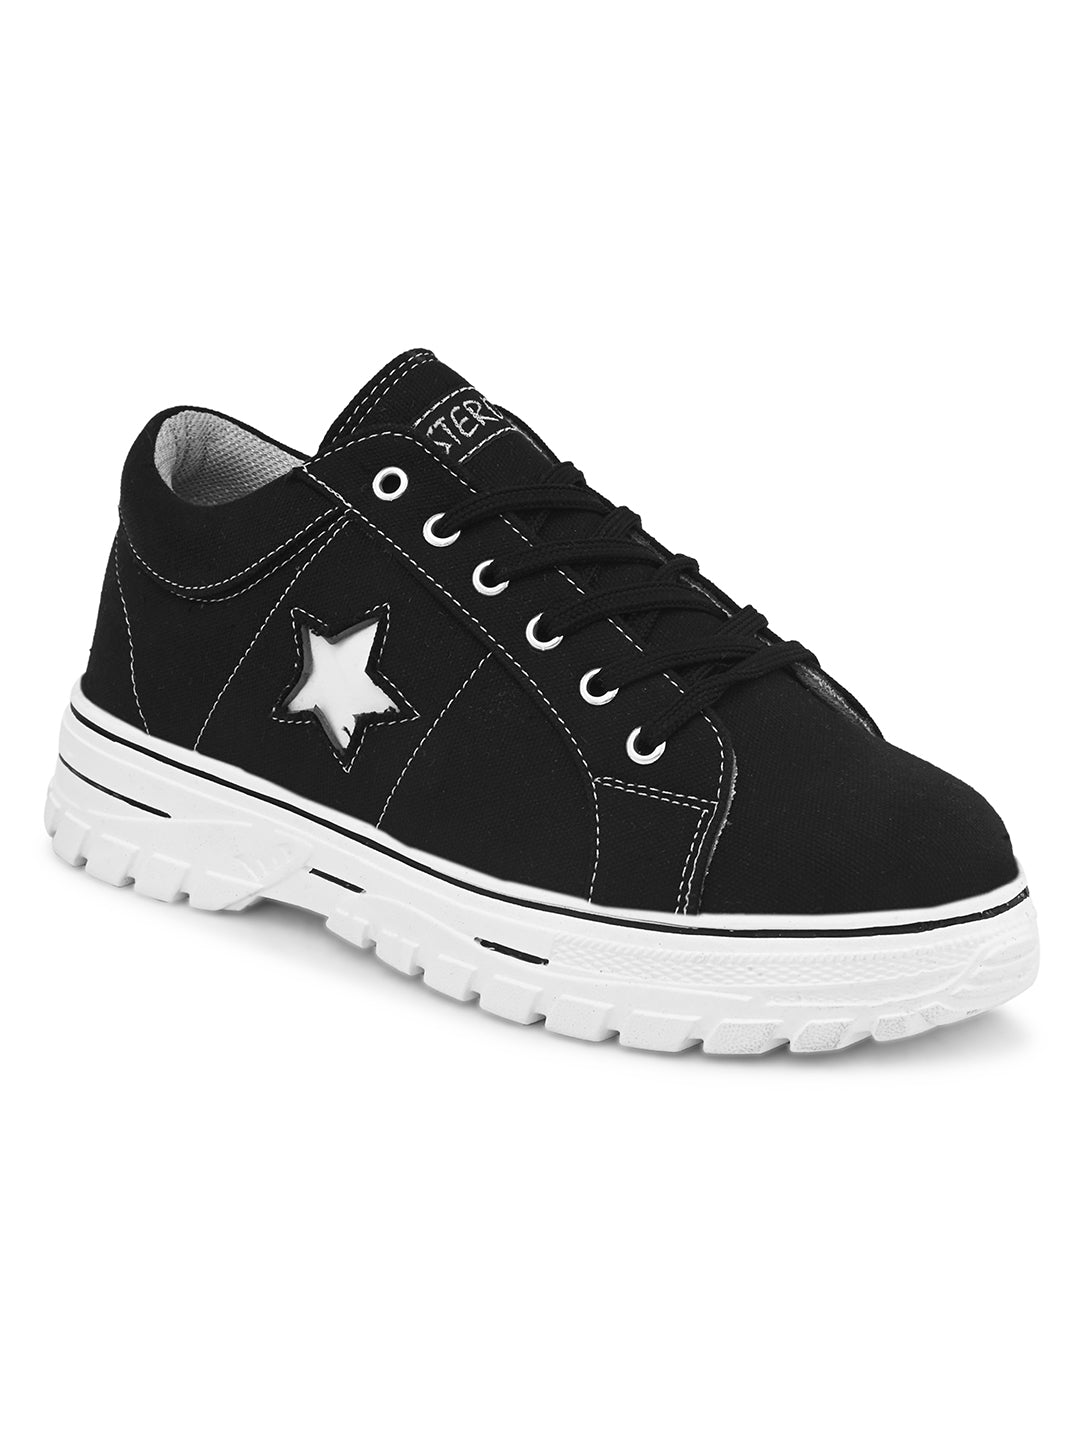 STAR Canvas Premium Sneakers. (151-BLK)